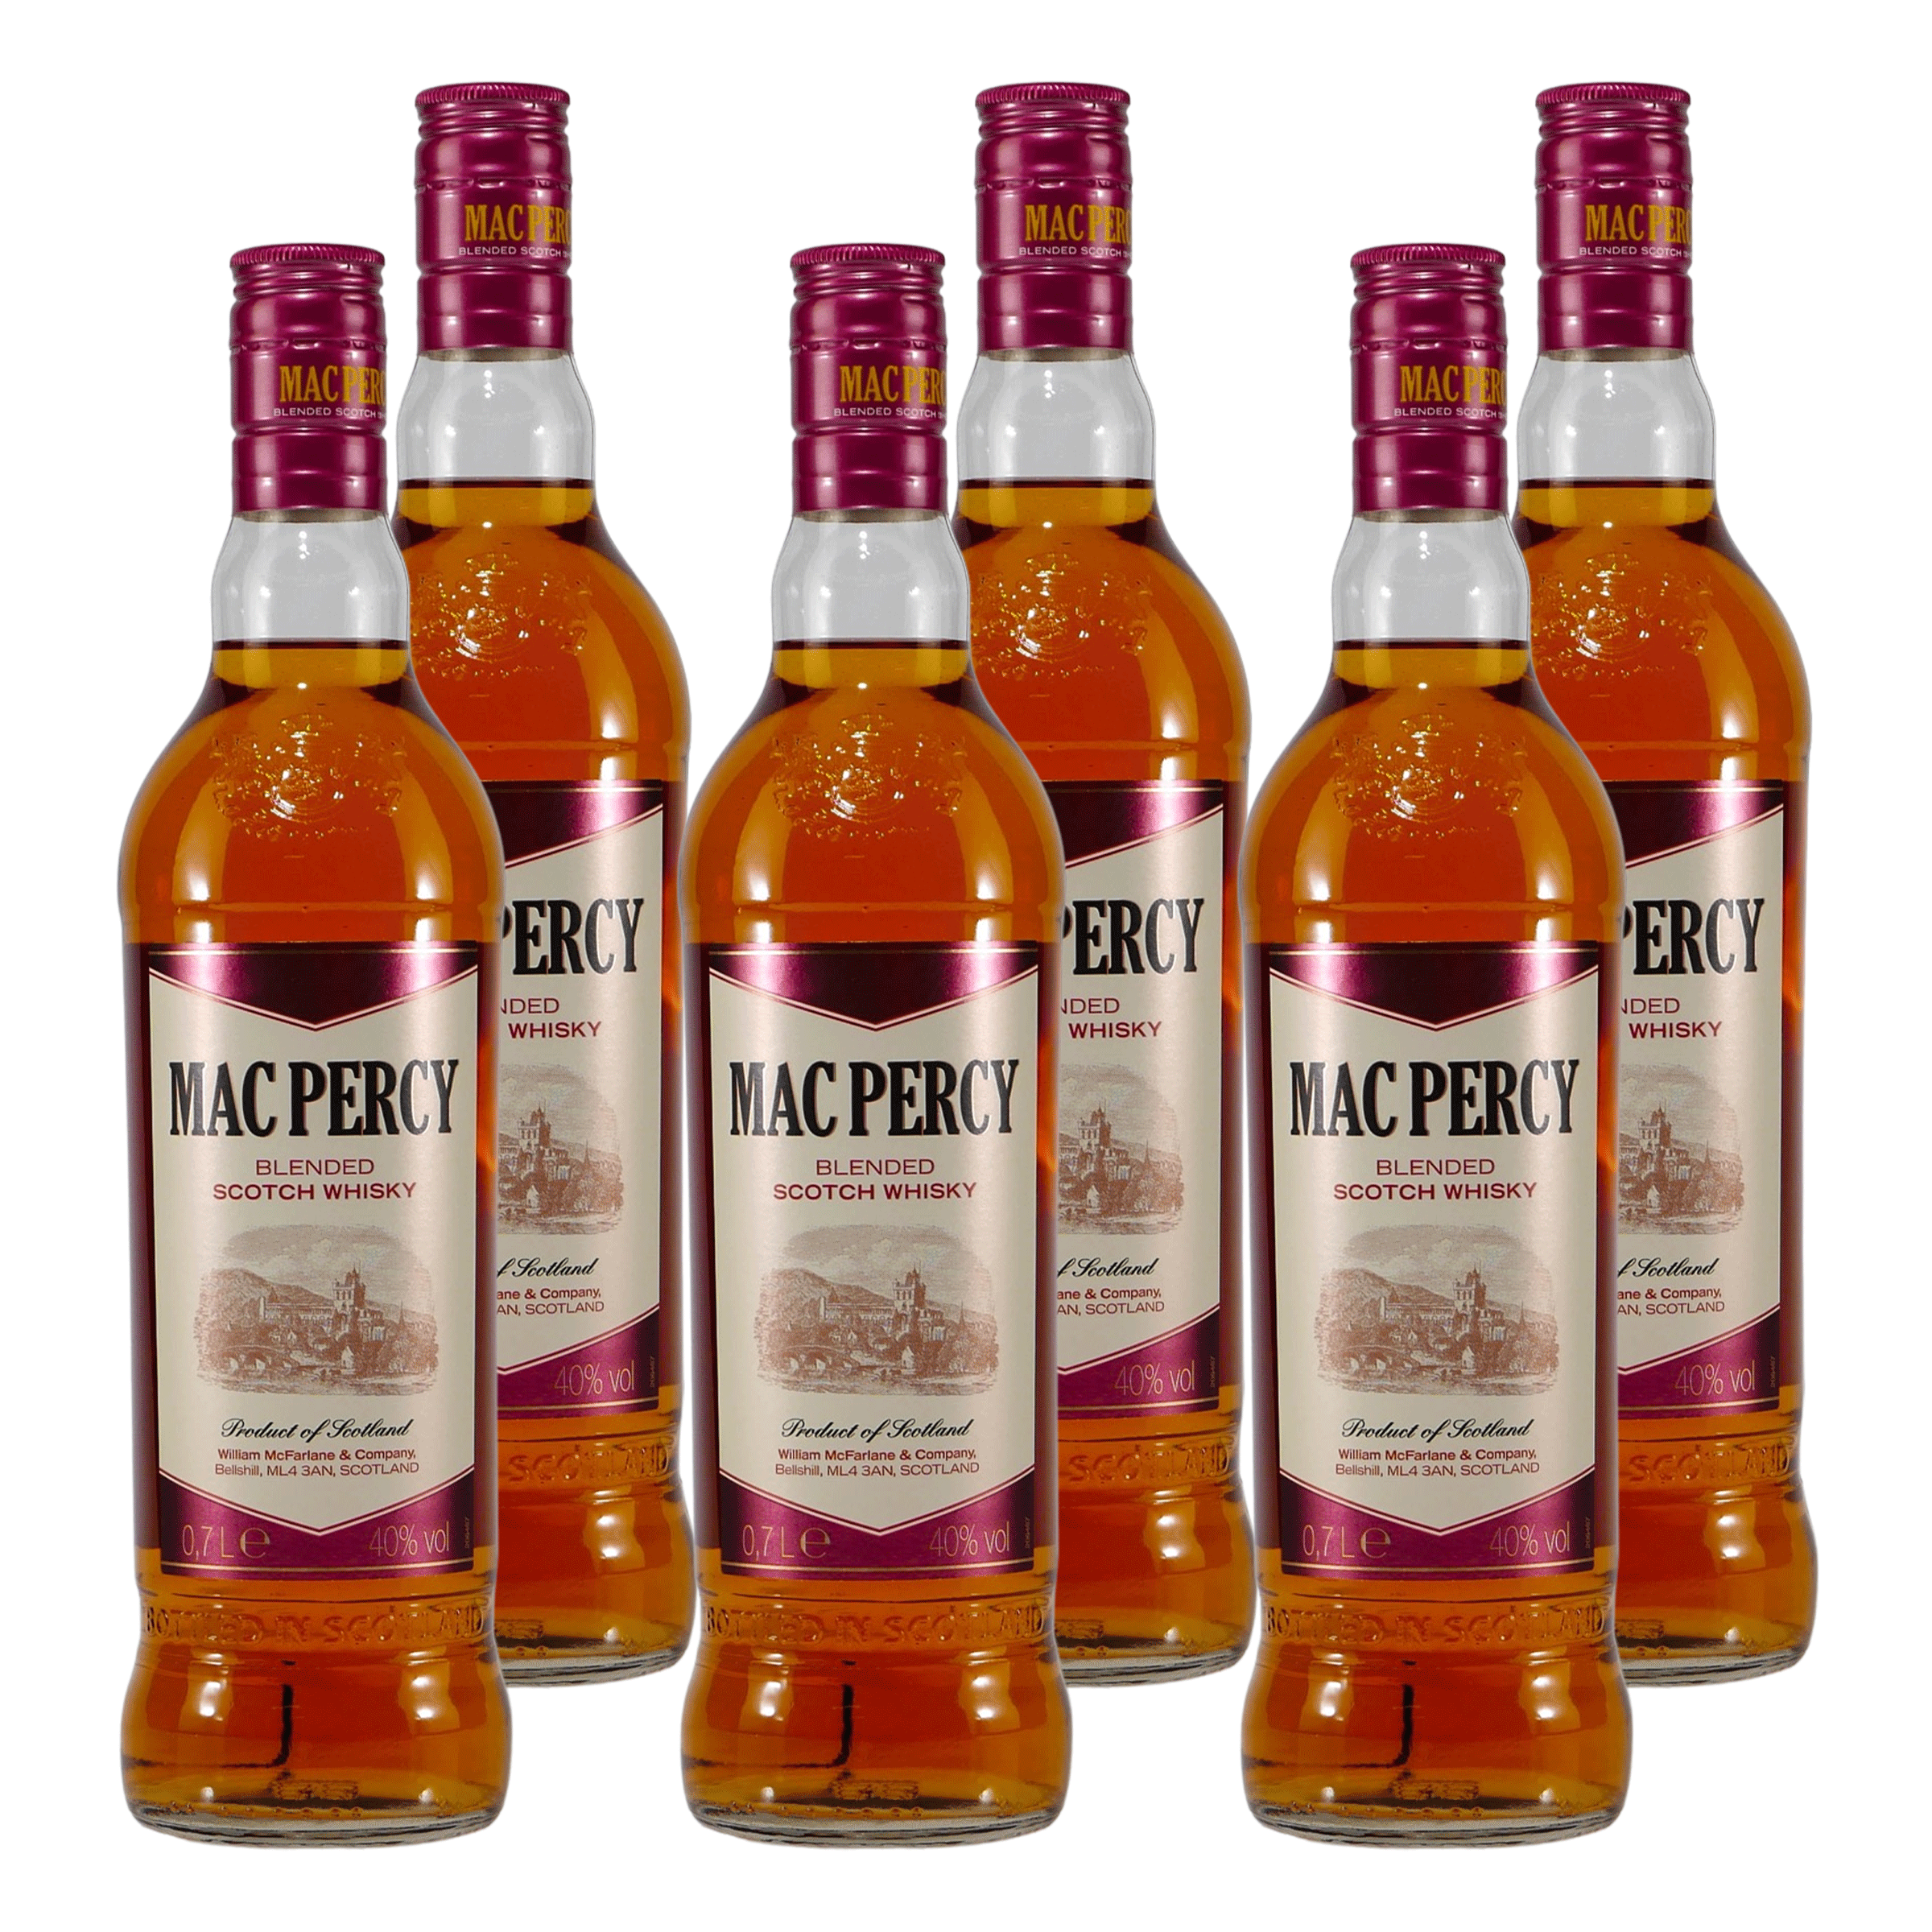 Mac Percy Blended Scotch Whisky (6 x 0,7L)